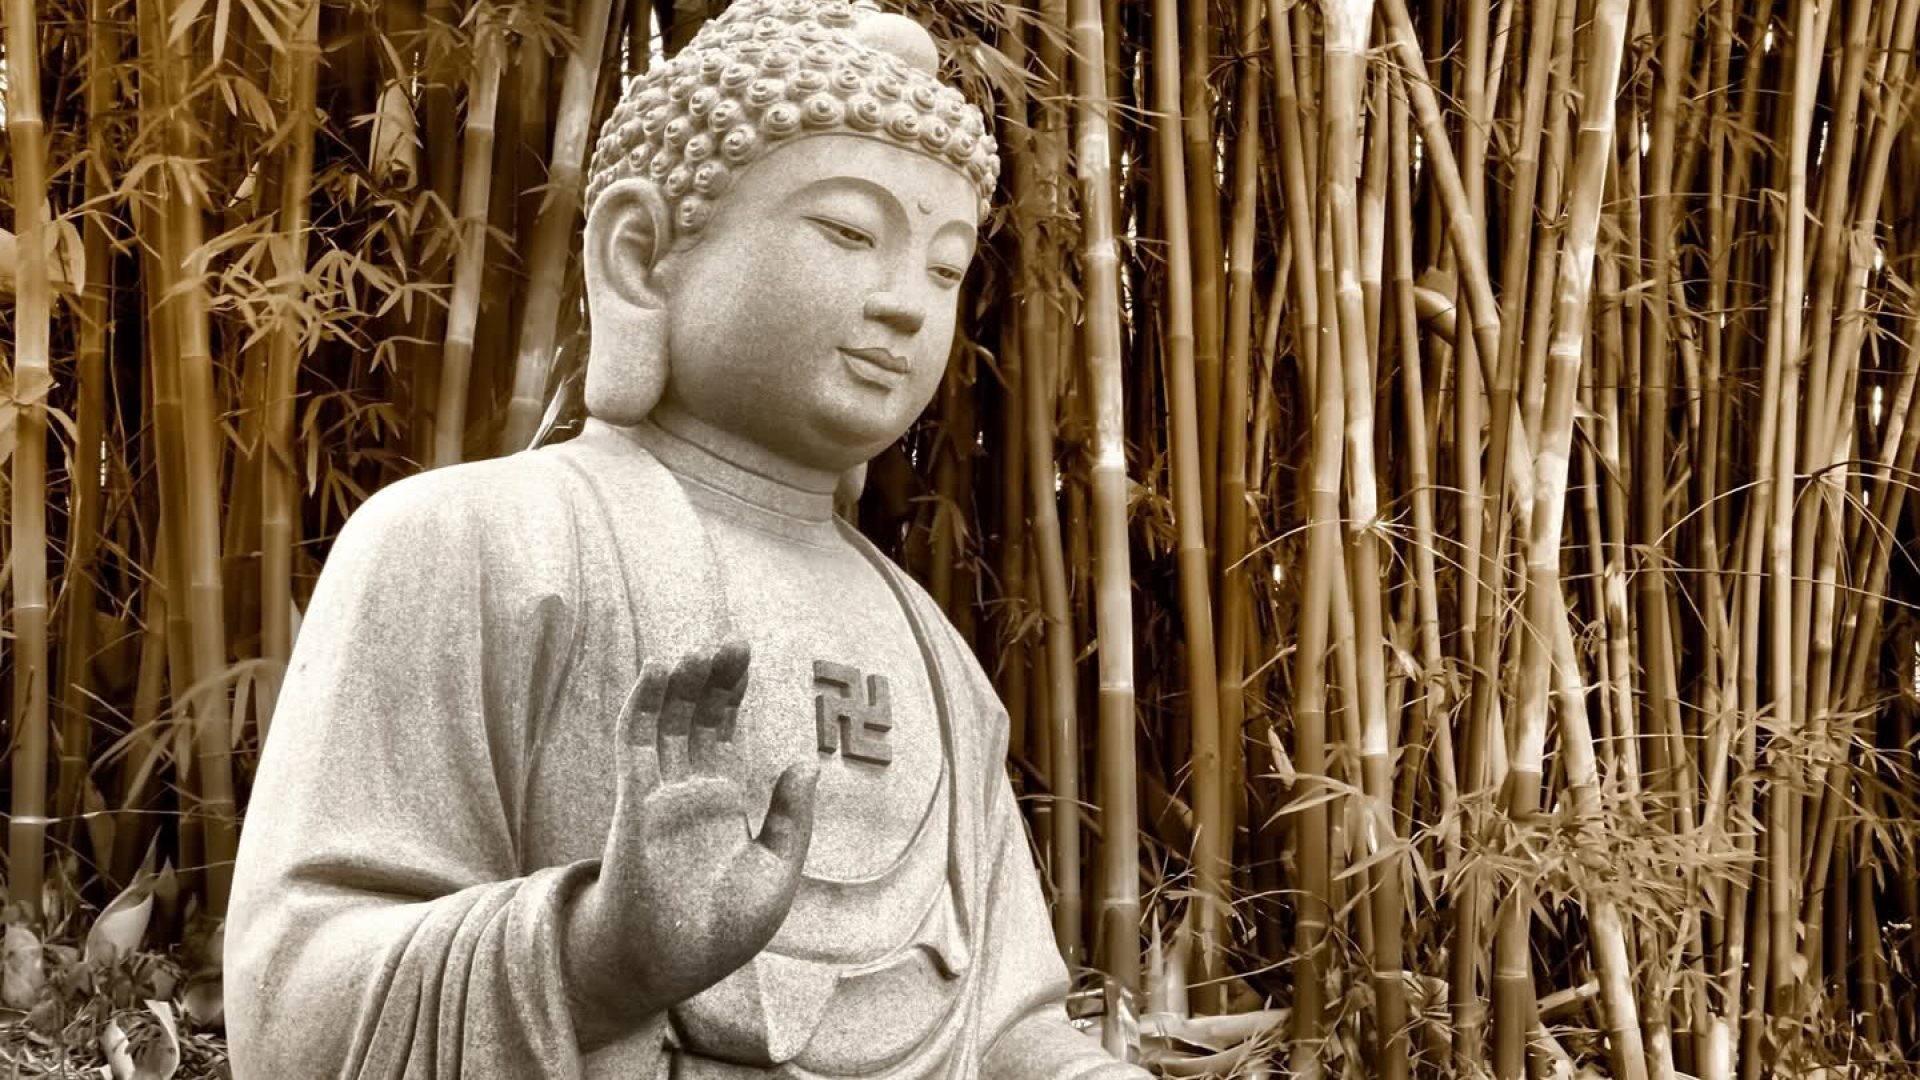 1920x1080 Bhagwan Buddha Images